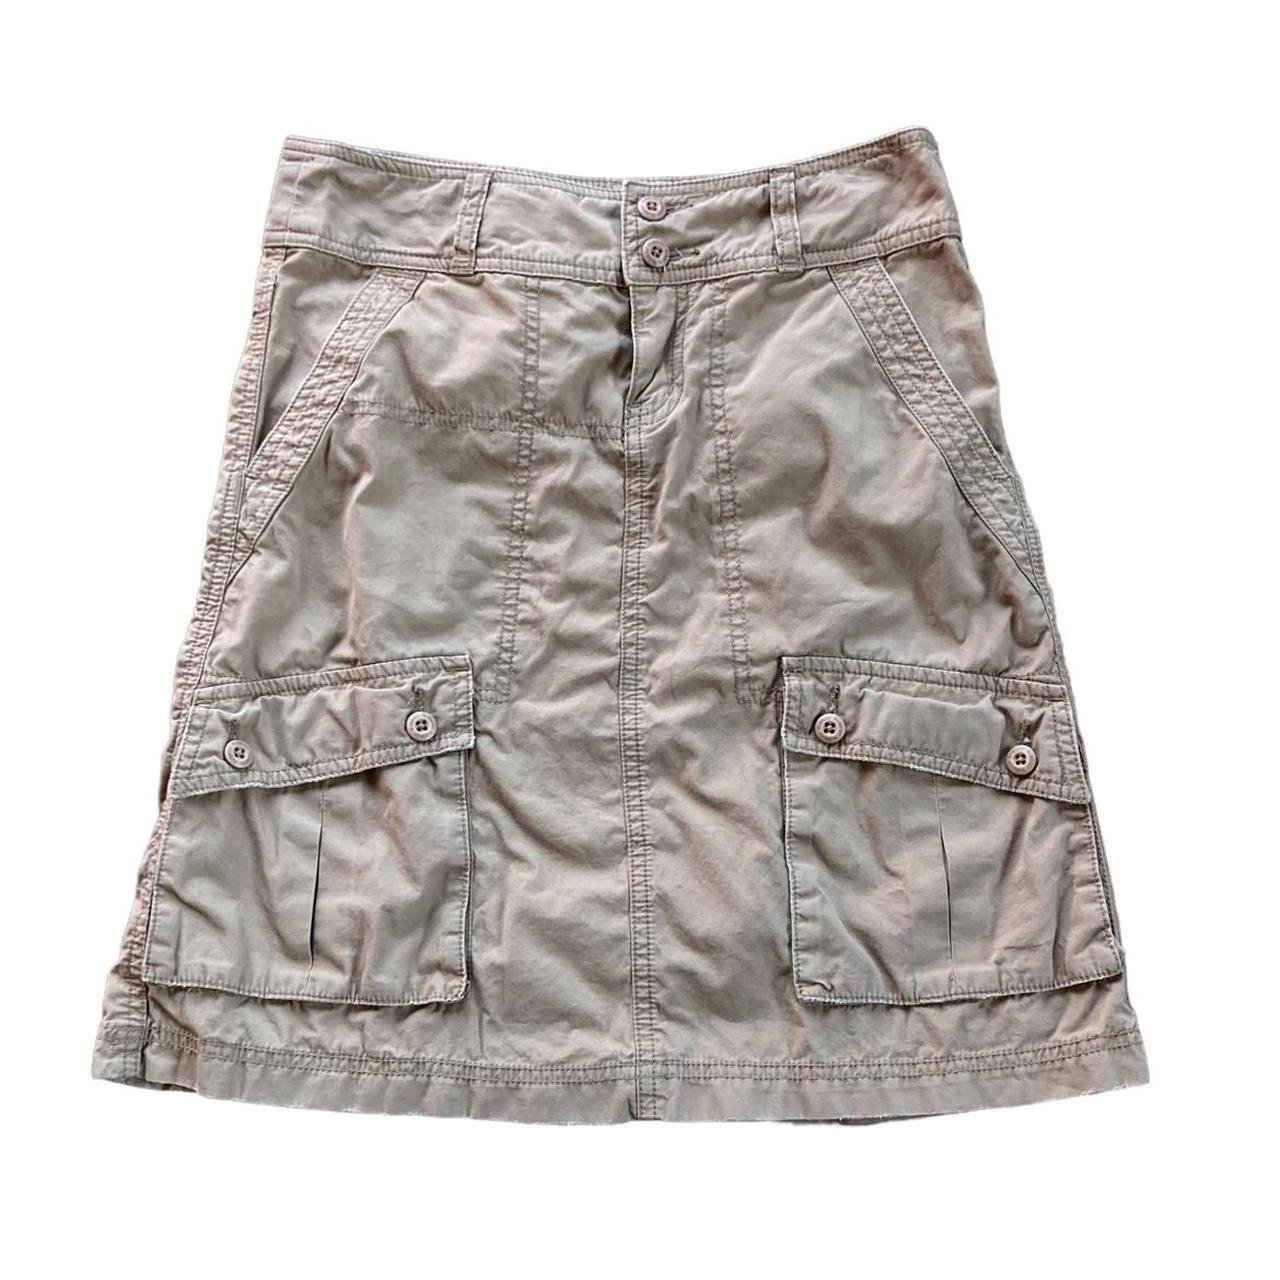 2000s khaki utility cargo skirt Tan skirt with... - Depop